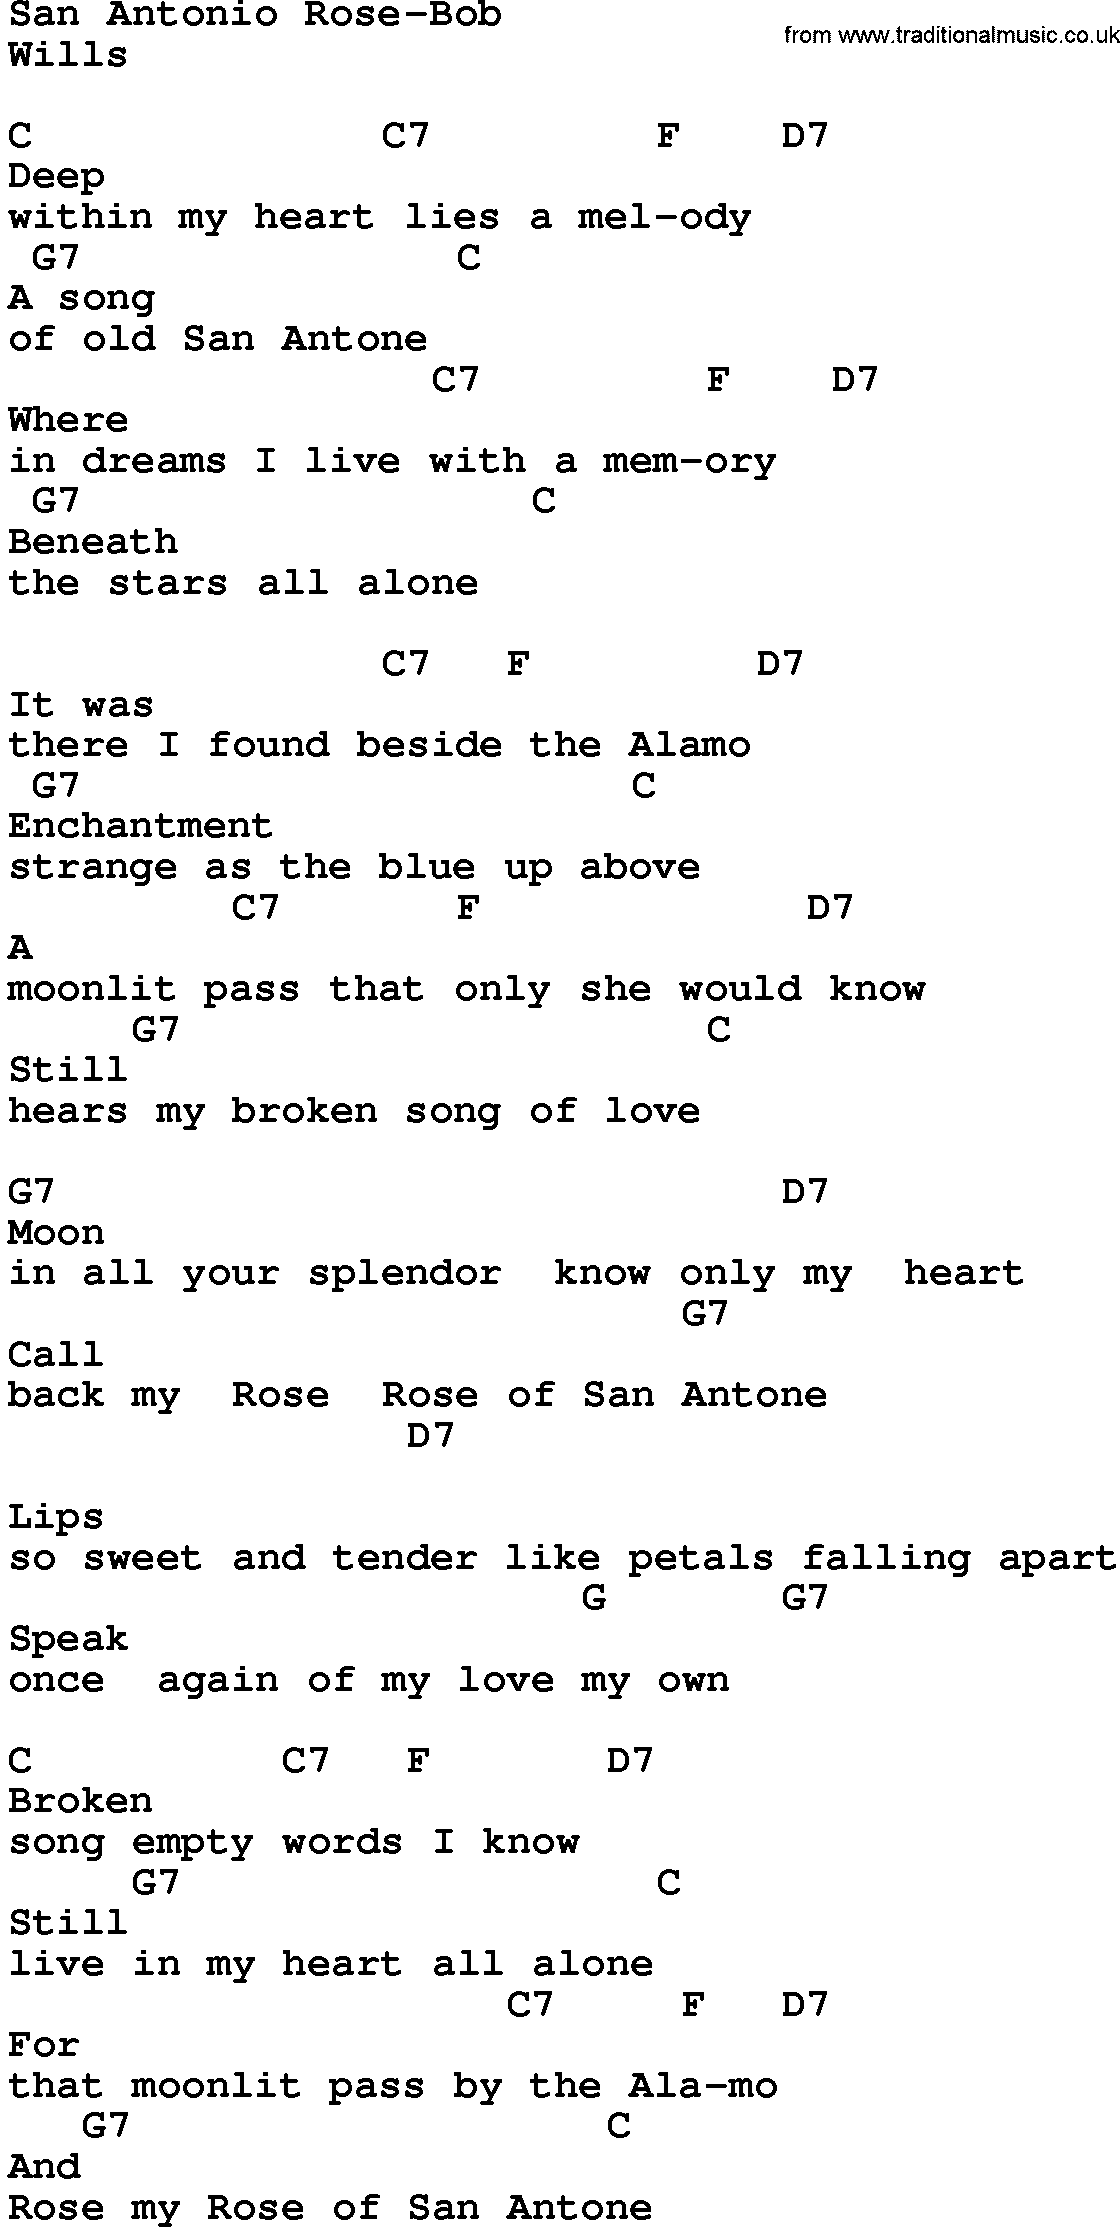 Country music song: San Antonio Rose-Bob lyrics and chords